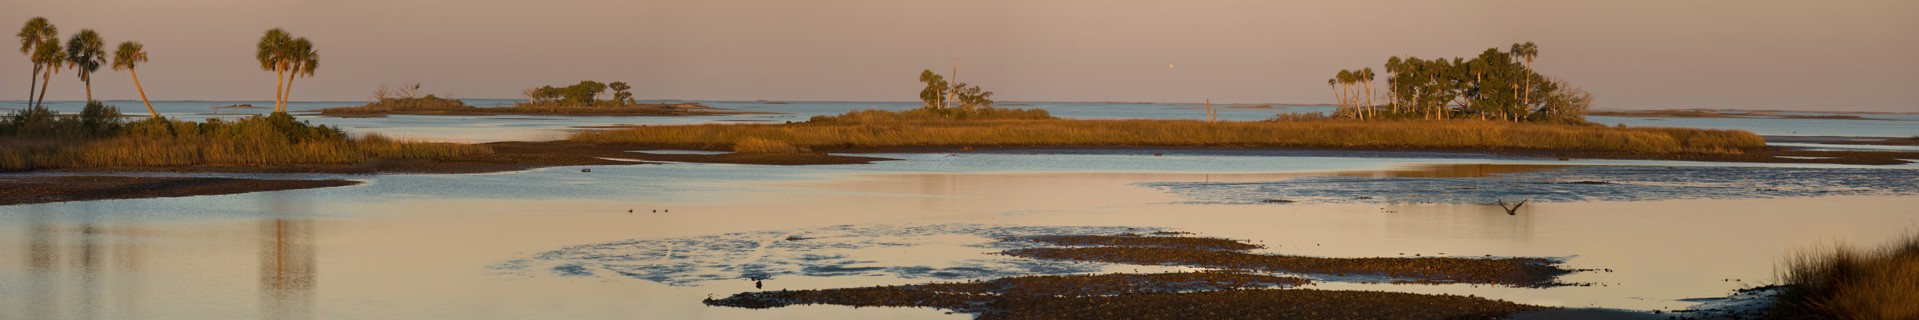 Withlacoochee Bay by Carlton Ward Photography